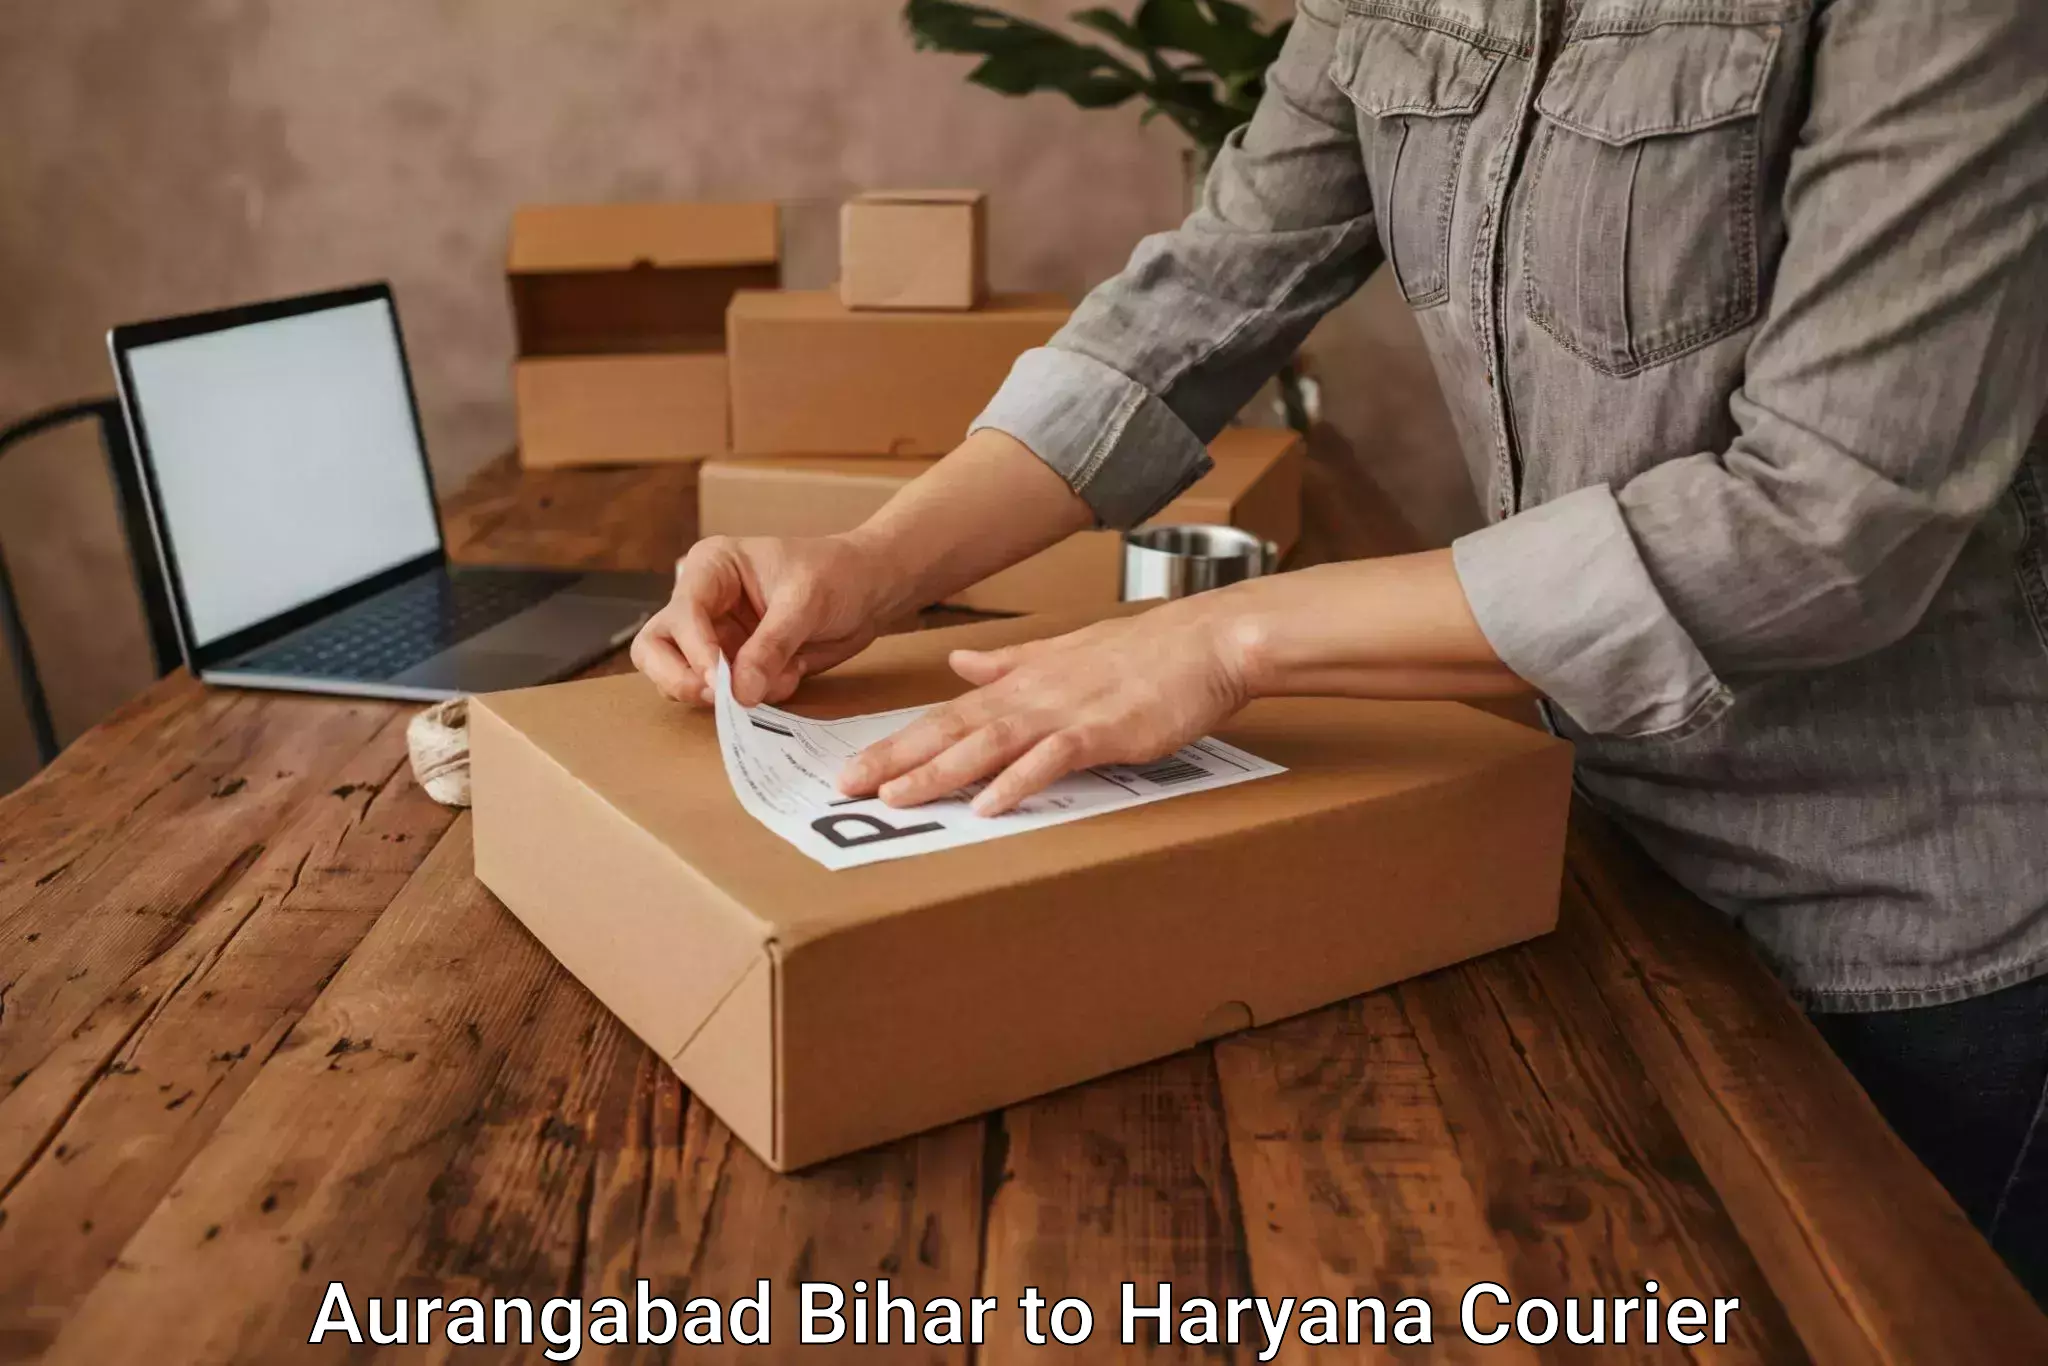 Professional moving company Aurangabad Bihar to Haryana